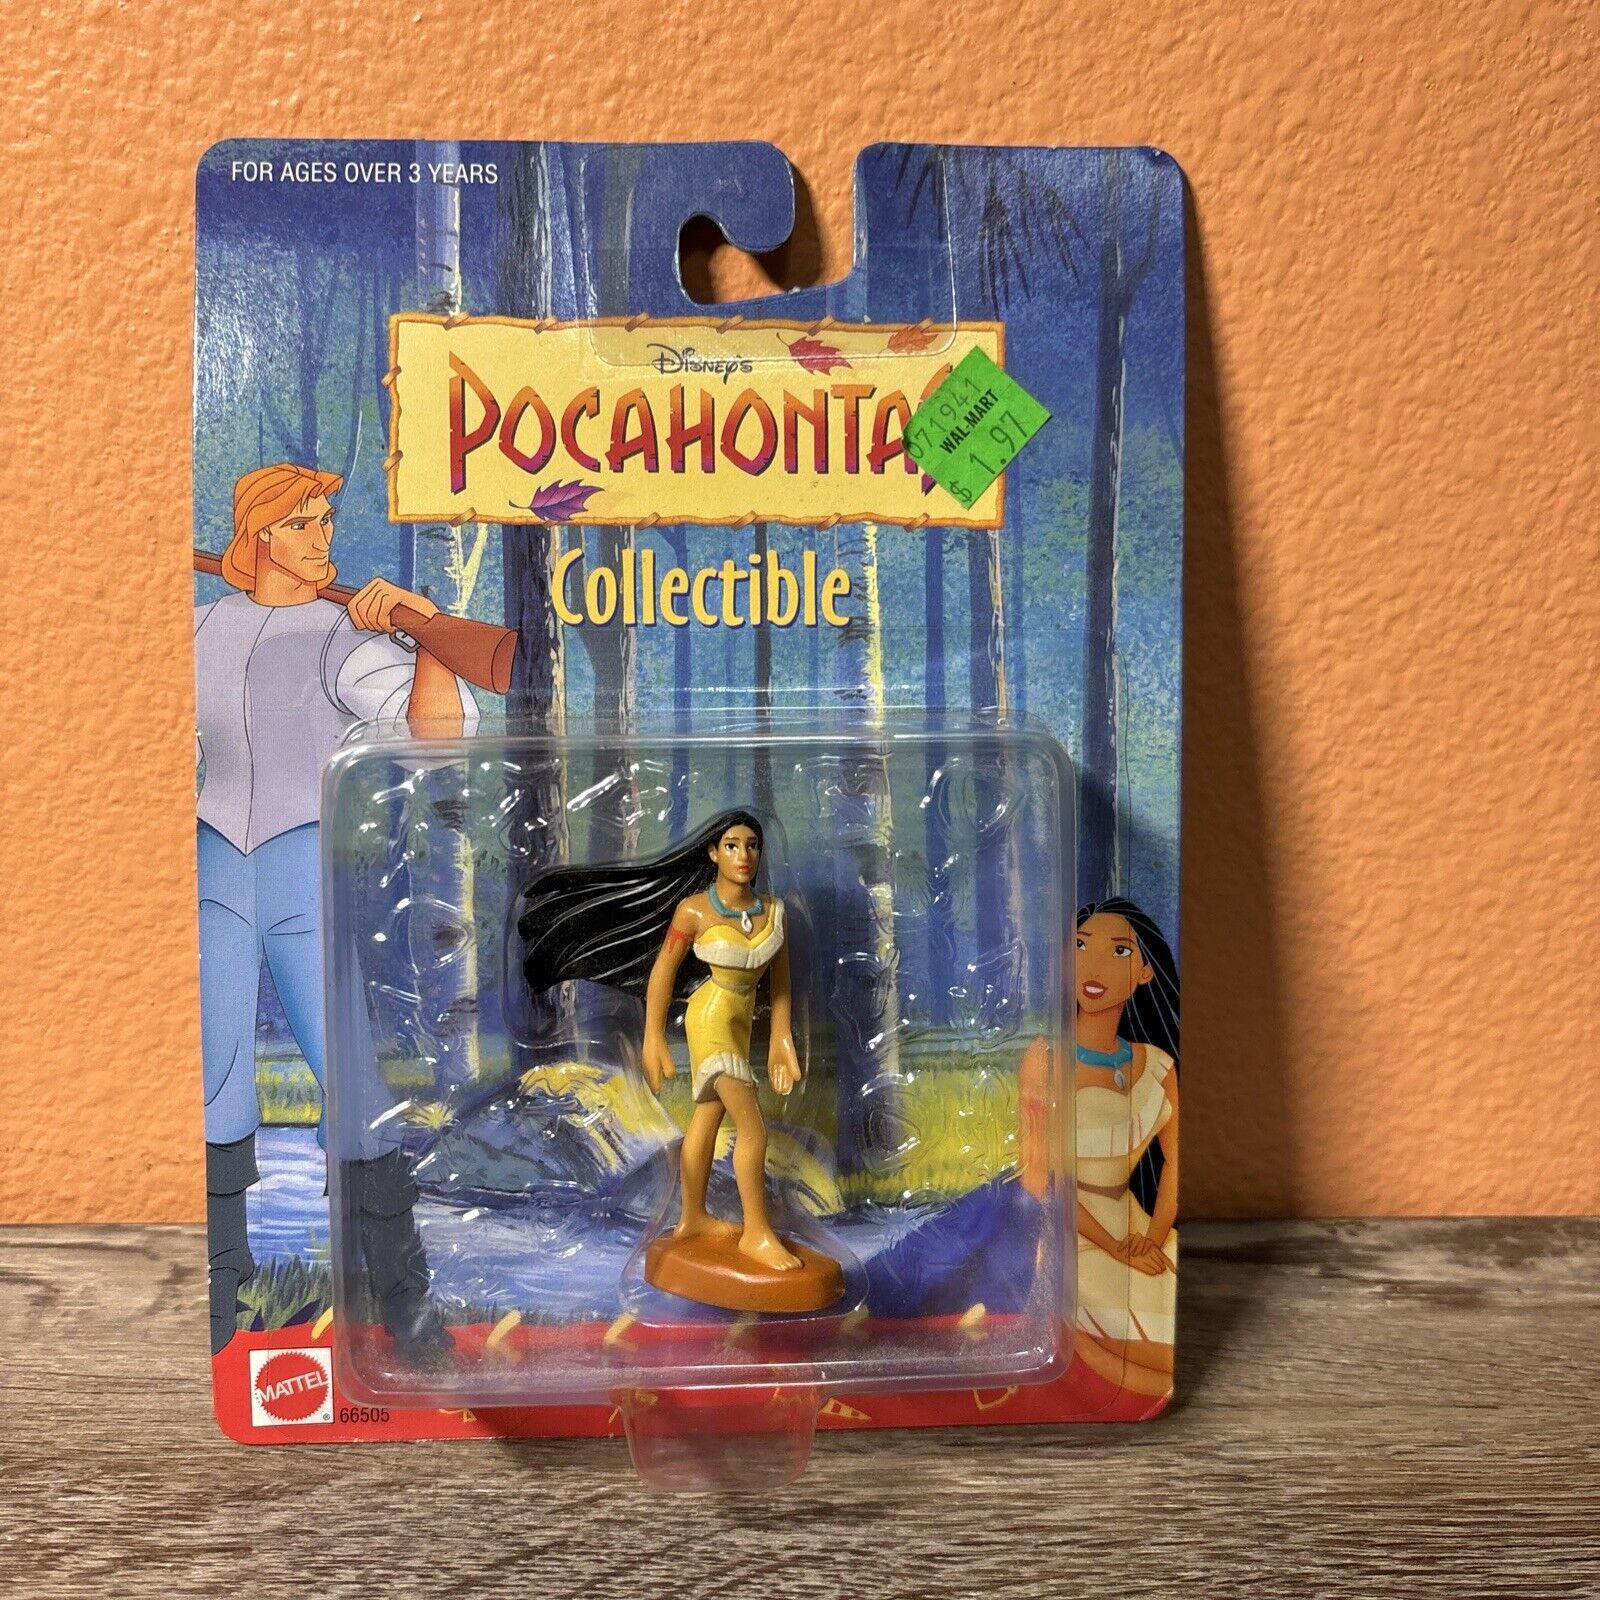 Vintage Disney's Pocahontas Collectible Figure Mattel #66505 New In Box